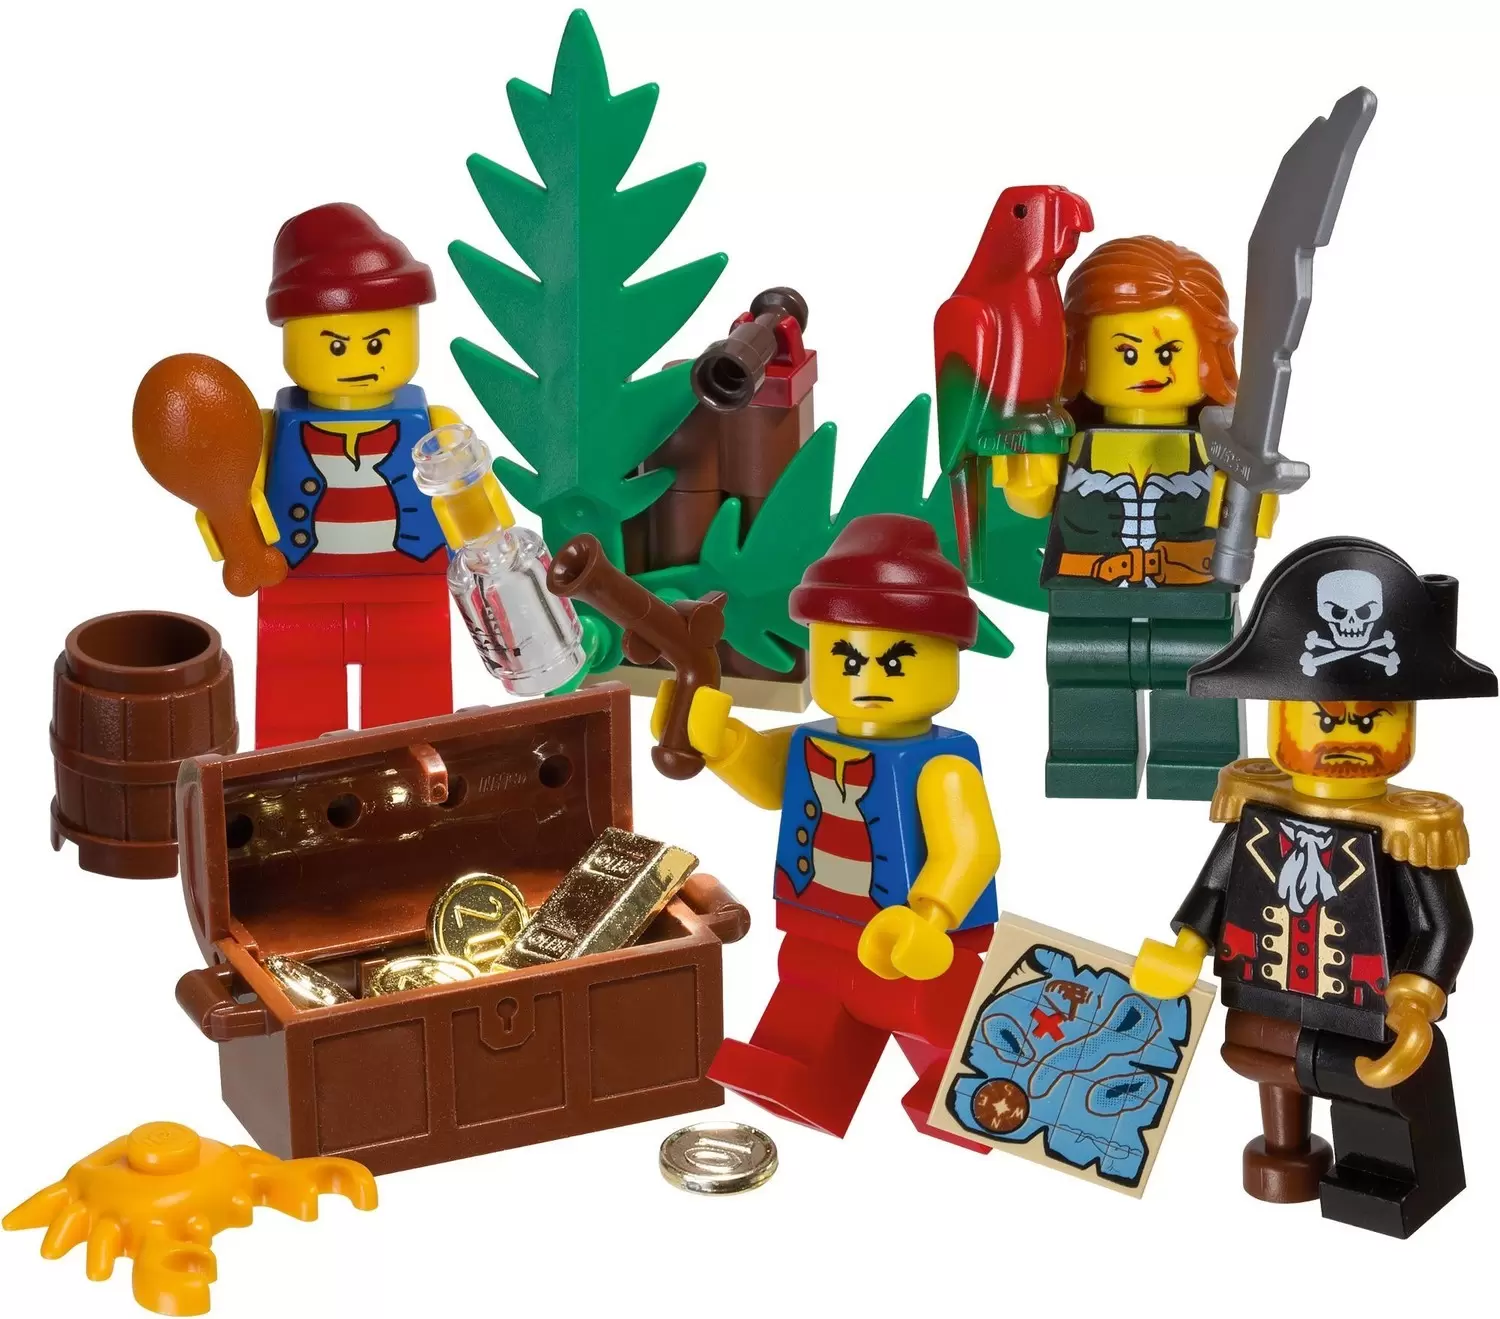 Classic Pirate Set - LEGO Pirates 850839